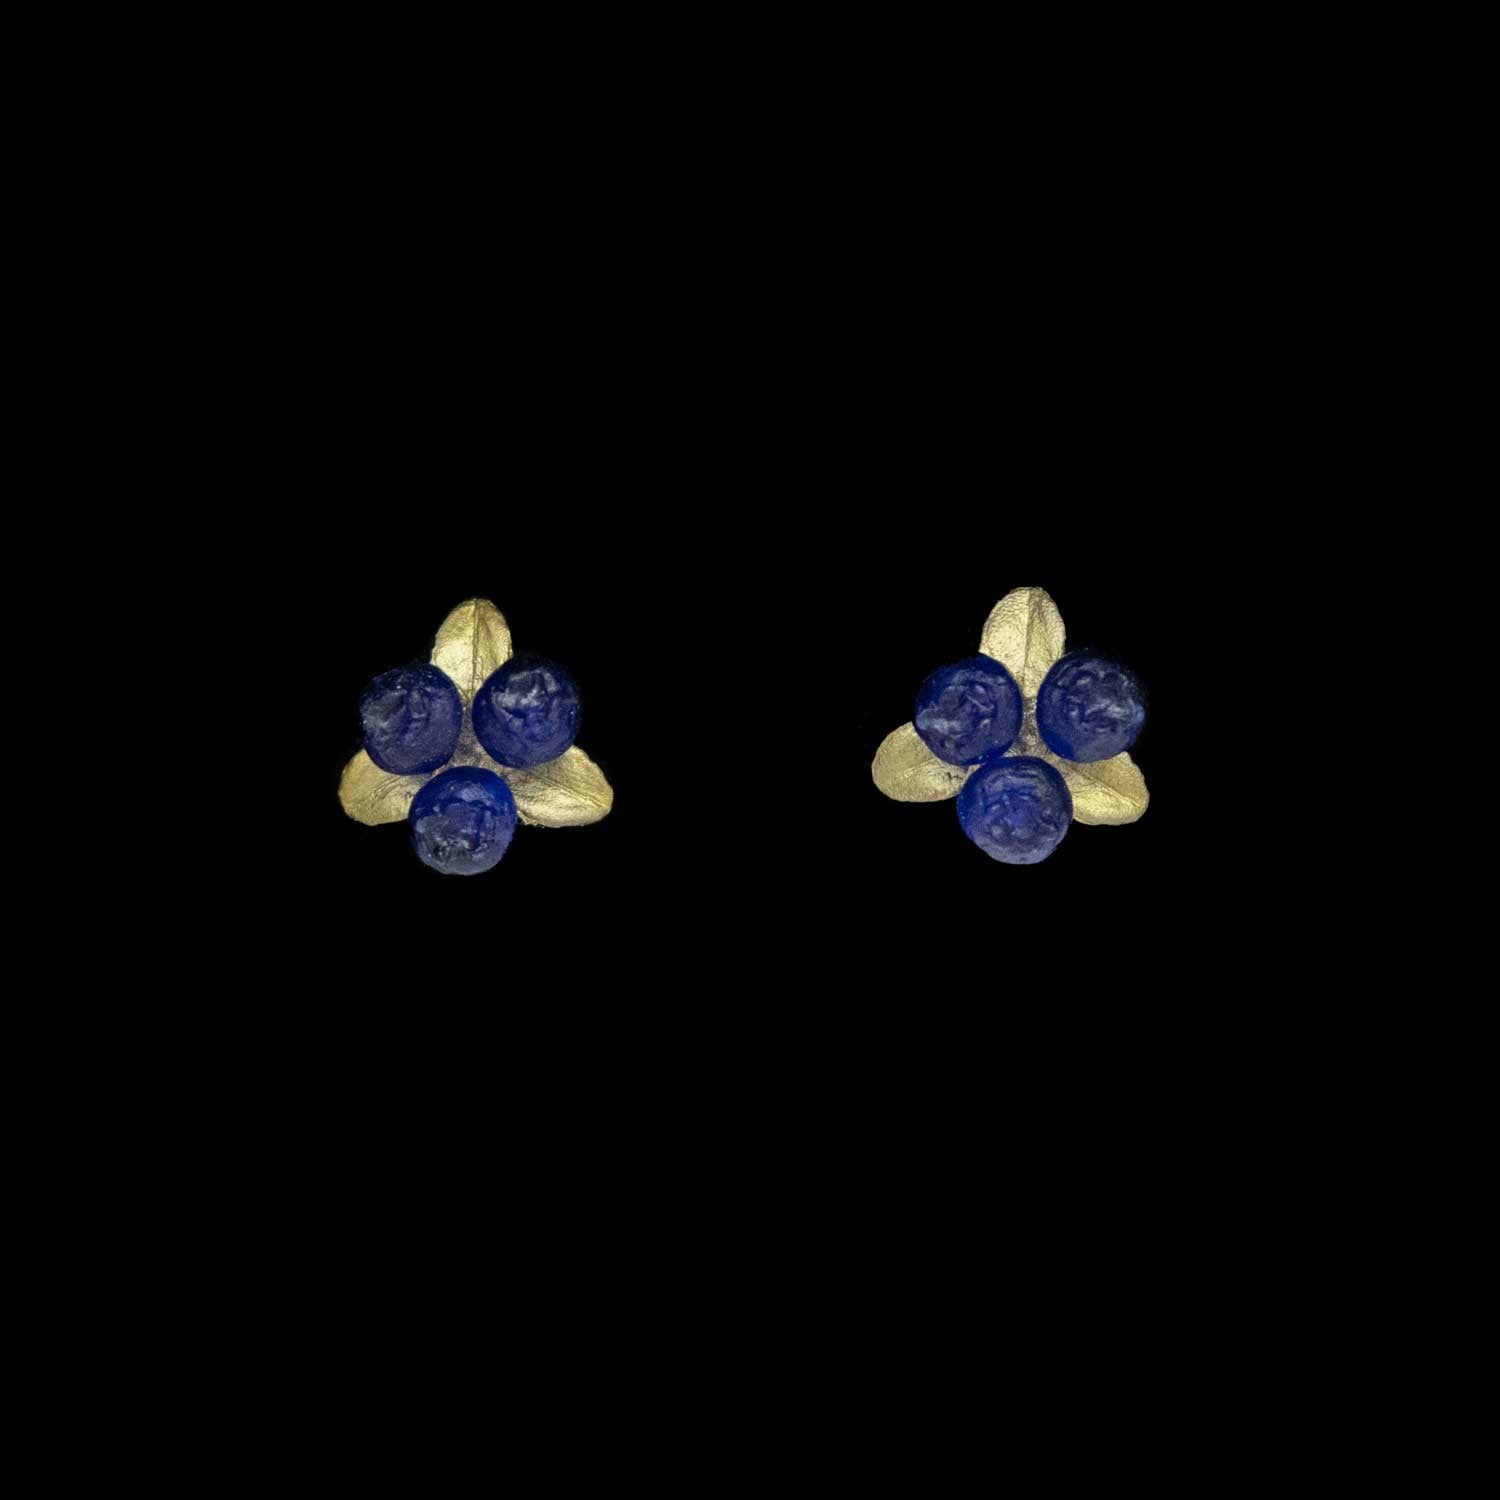 Petite Blueberry Earrings - Post